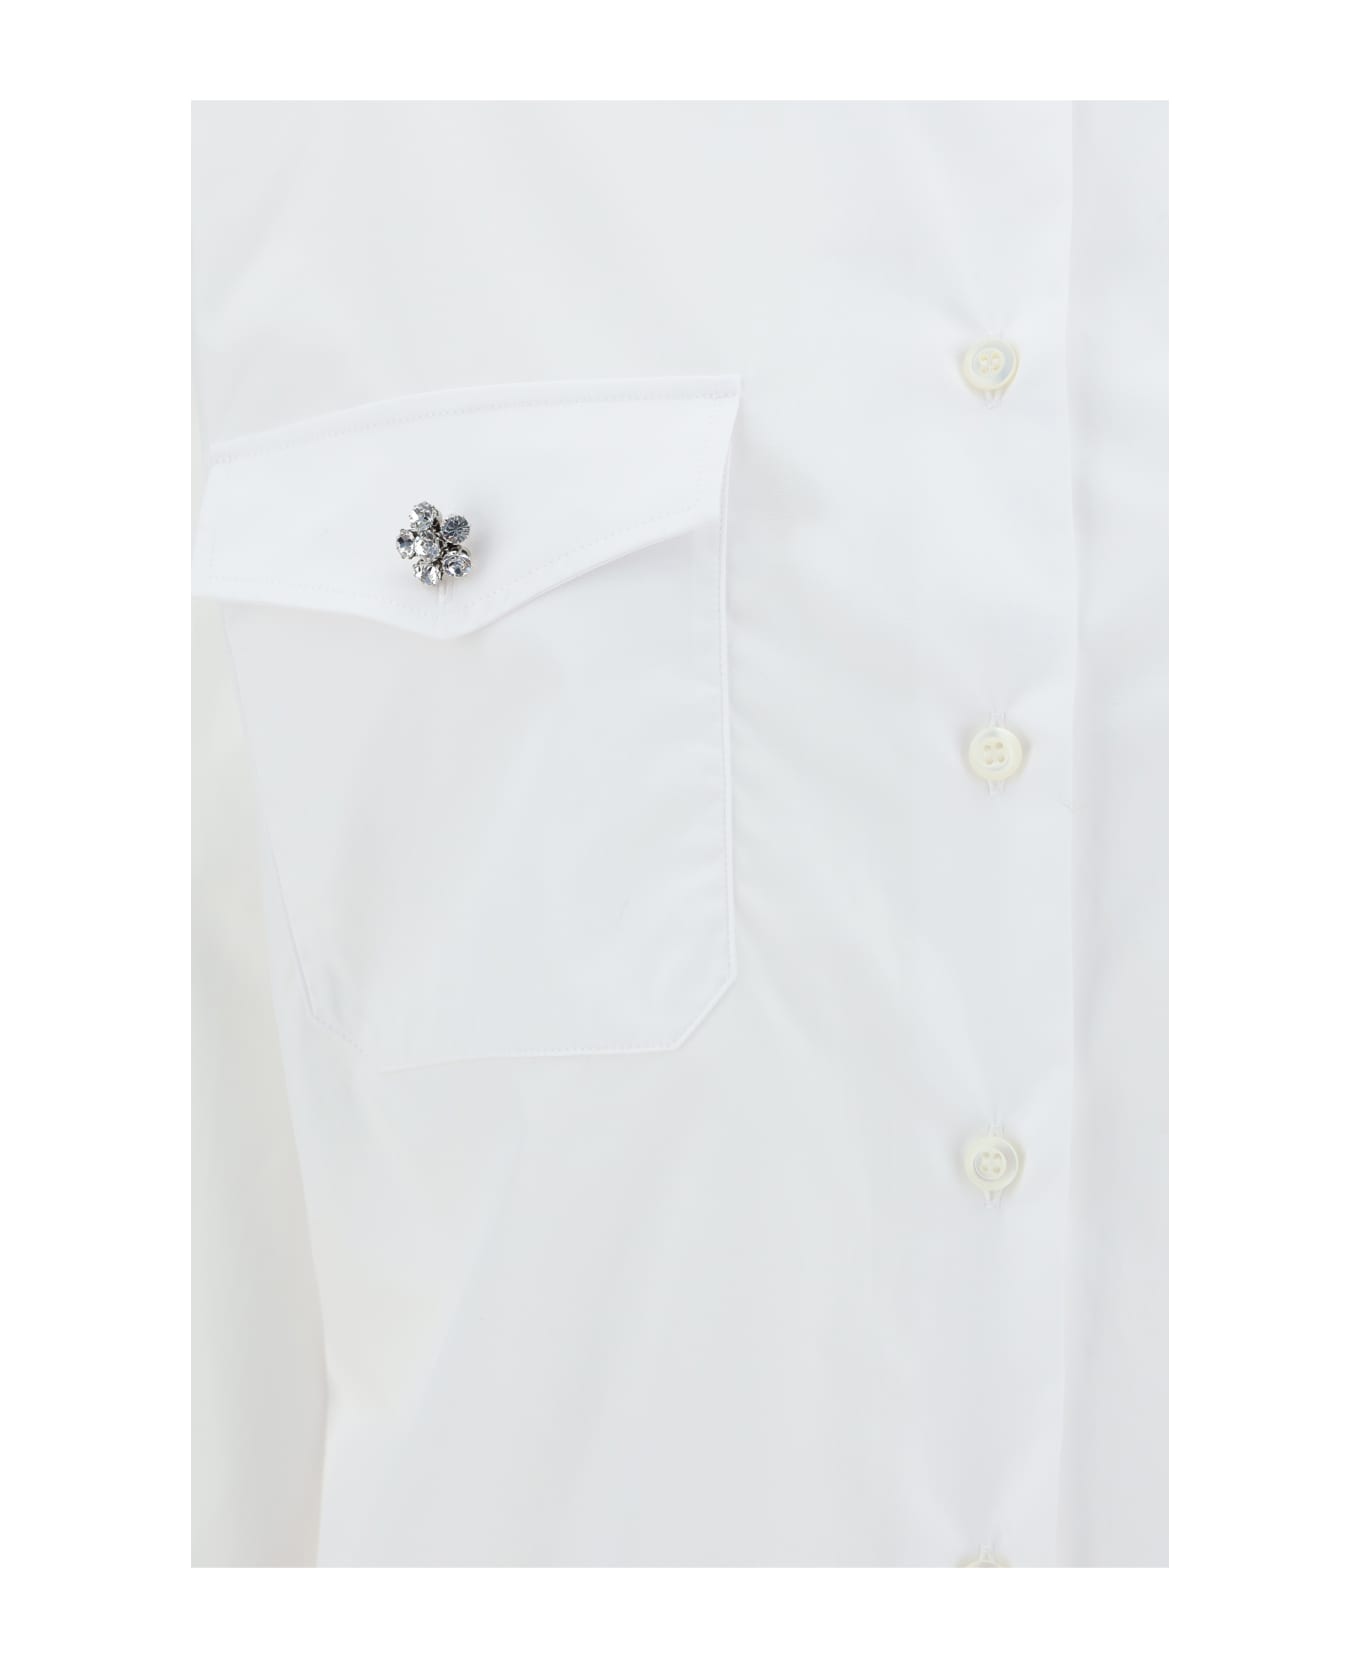 Prada Shirt - Bianco シャツ